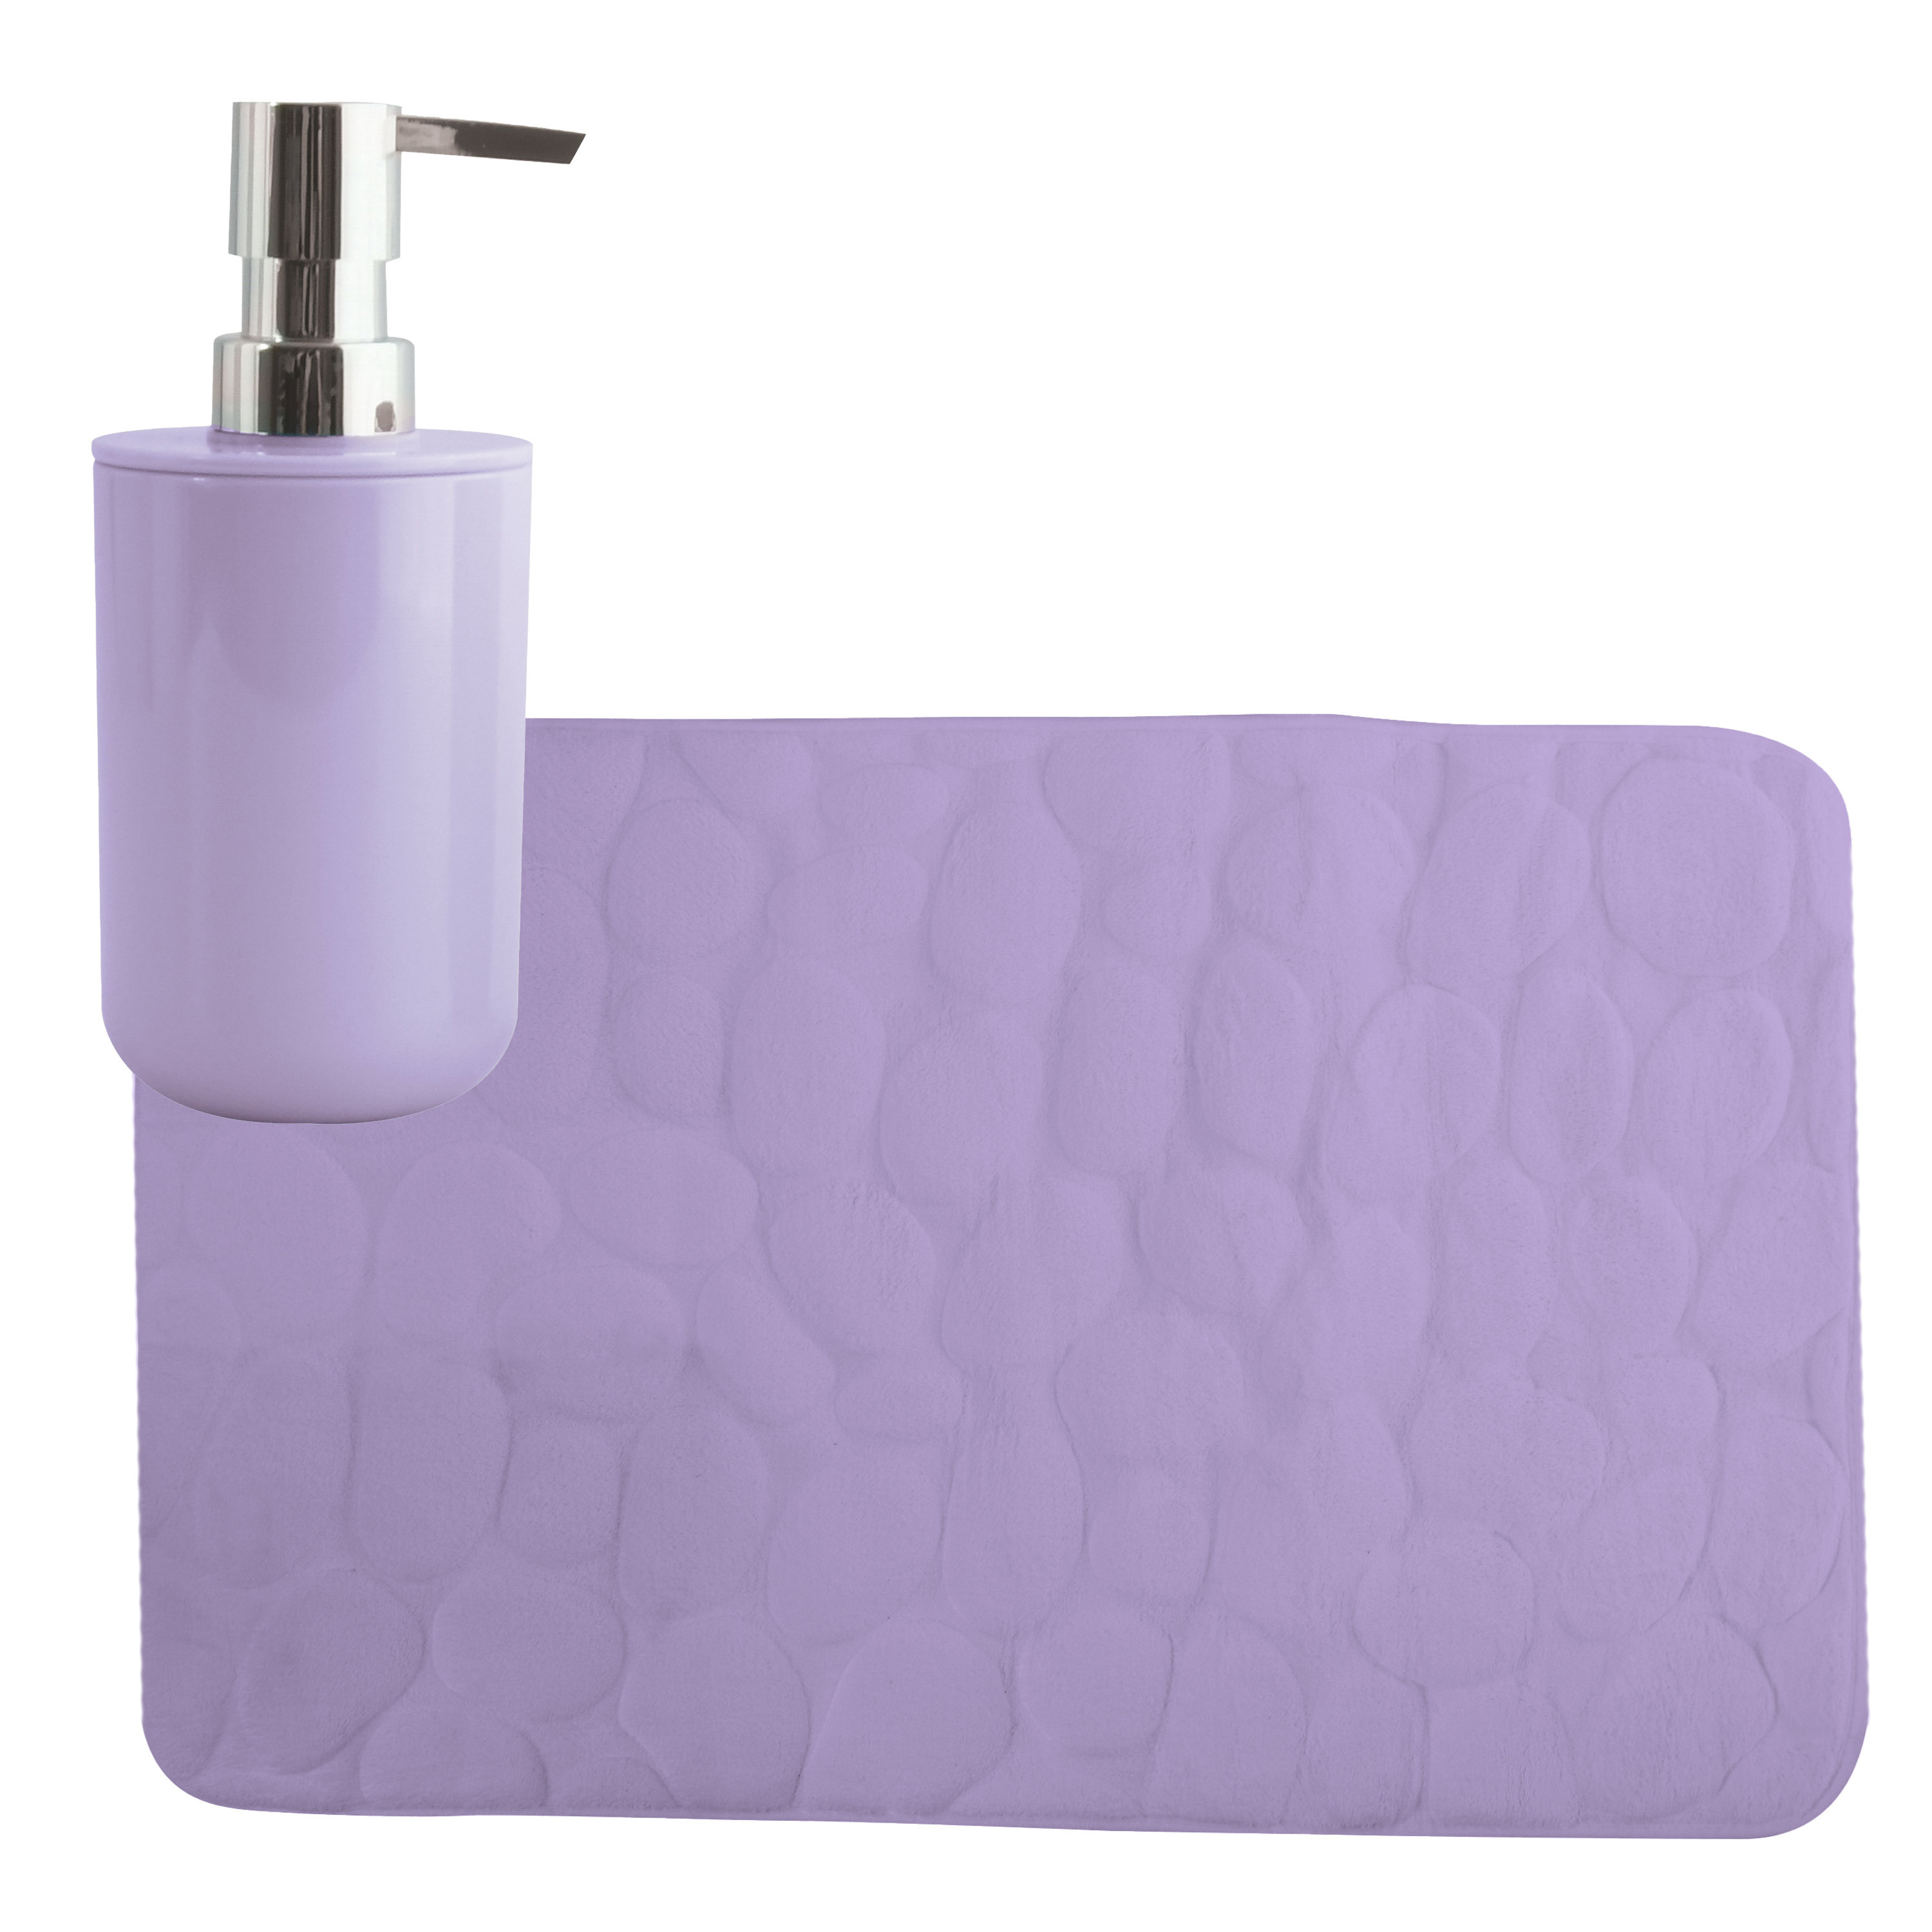 MSV badkamer droogloop mat-tapijt Kiezel 50 x 80 cm zelfde kleur zeeppompje lila paars